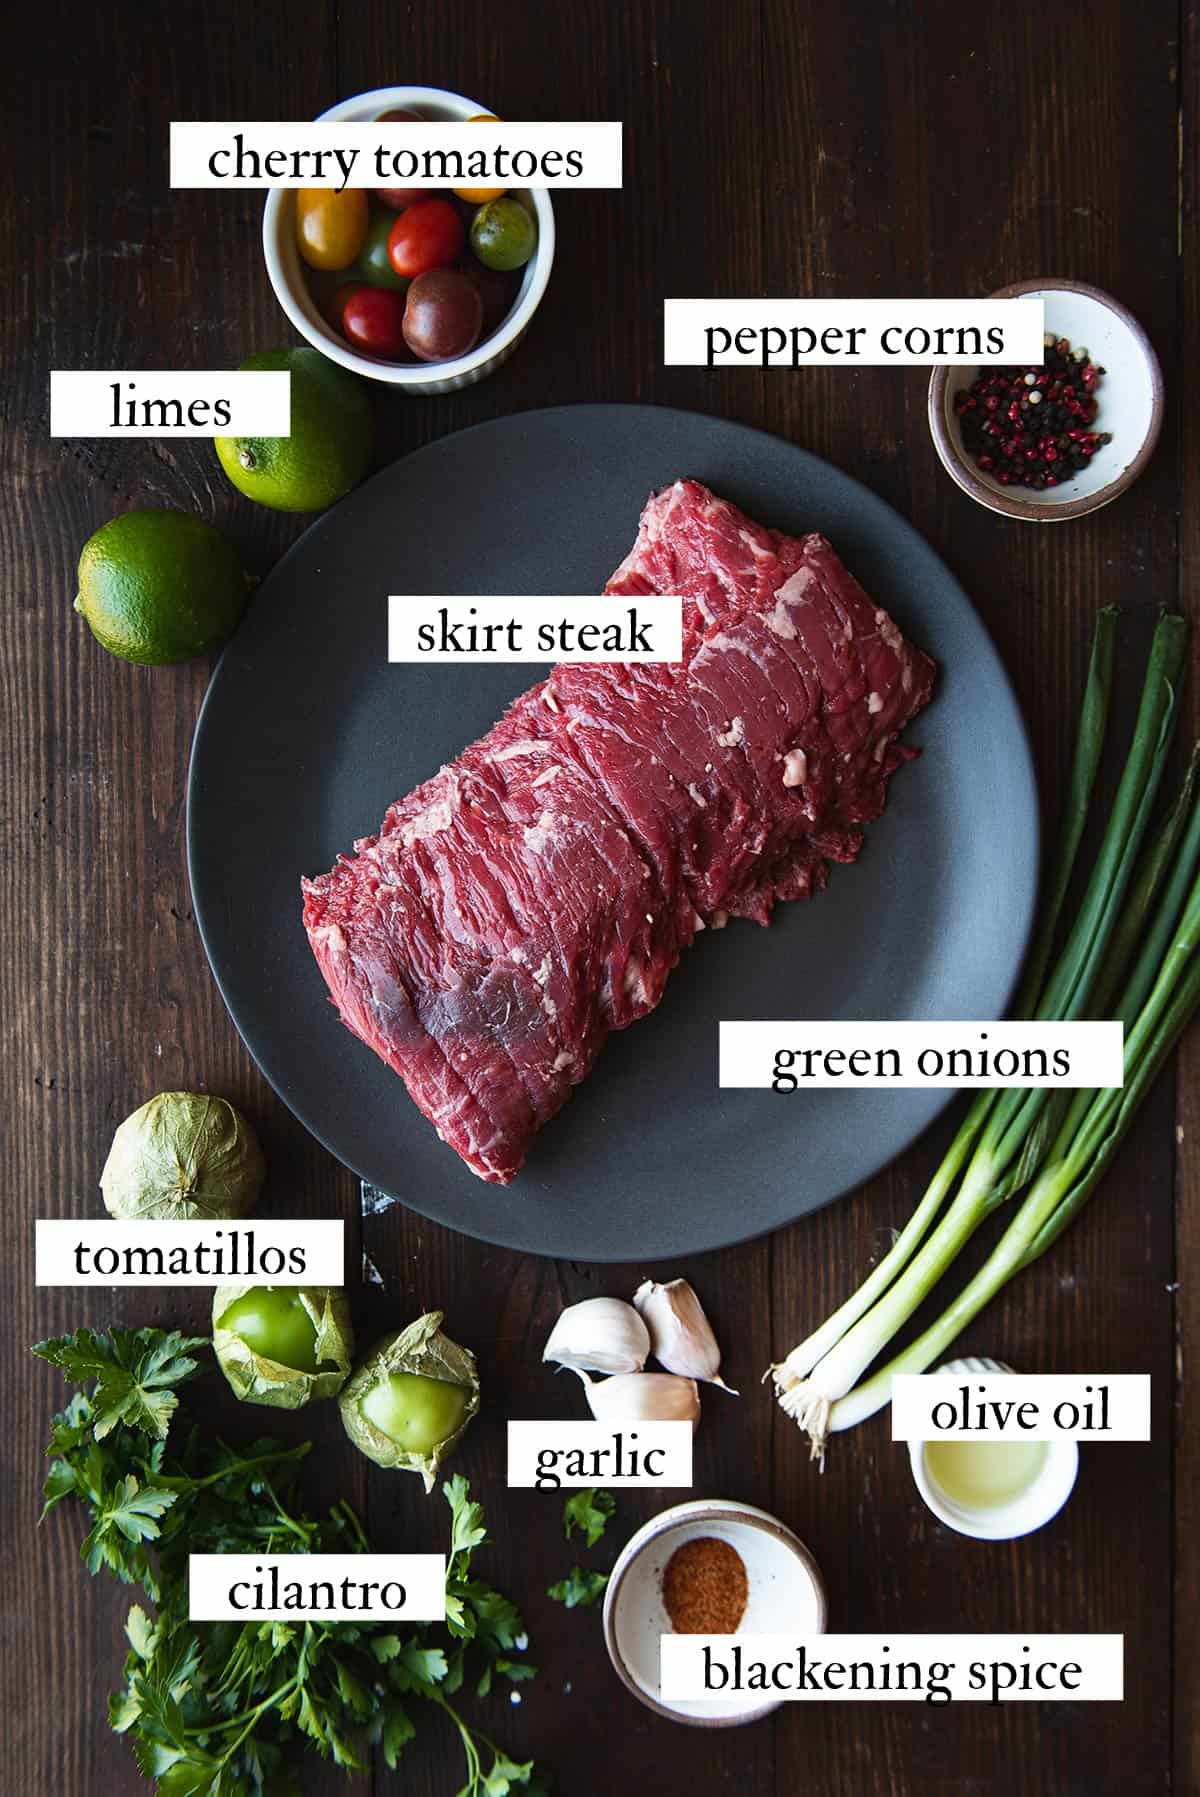 skirt steak ingredients on wooden table